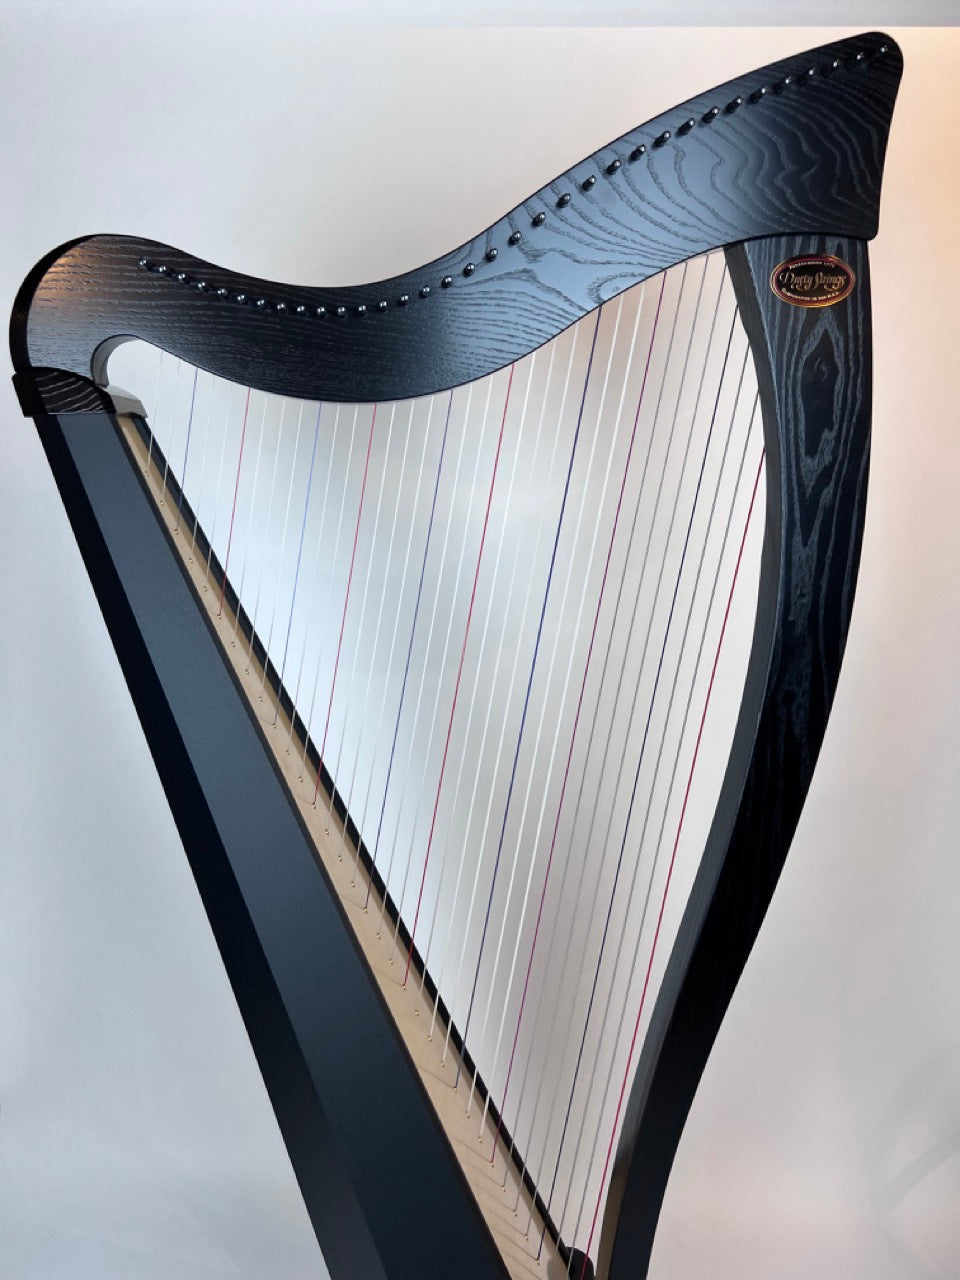 Dusty Strings Ravenna 34 Harp